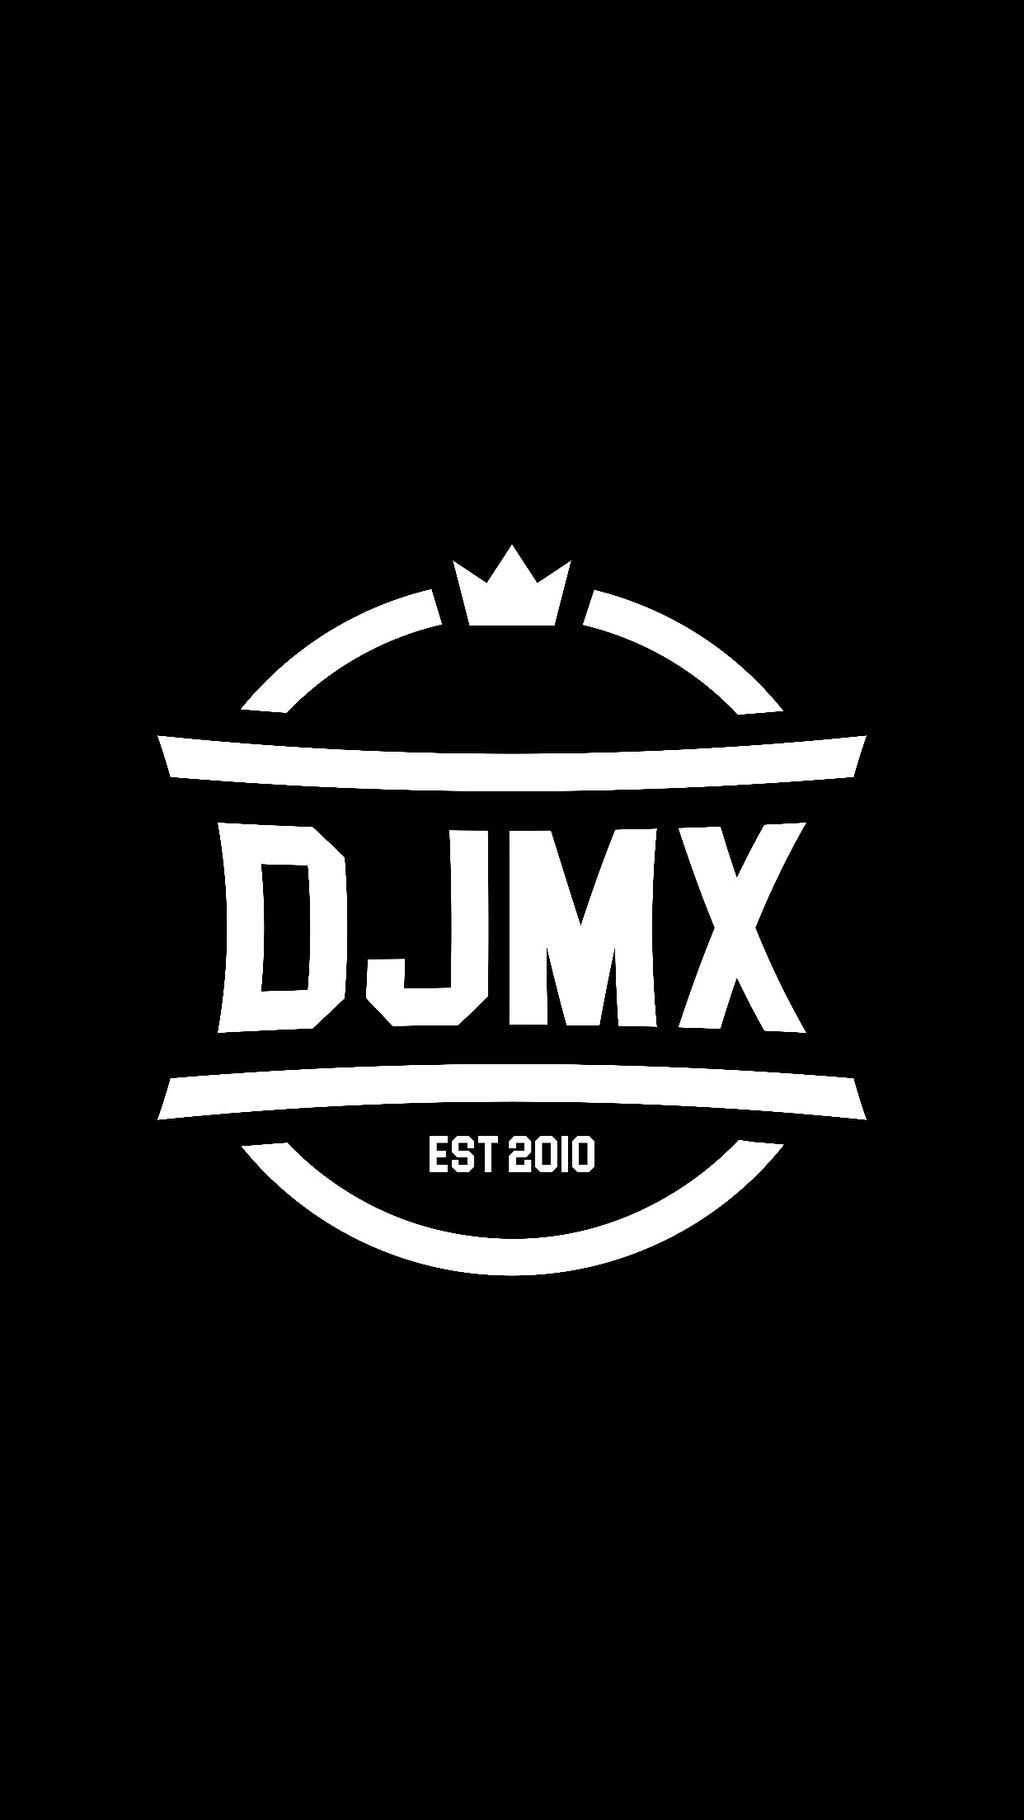 DJMX Entertainment